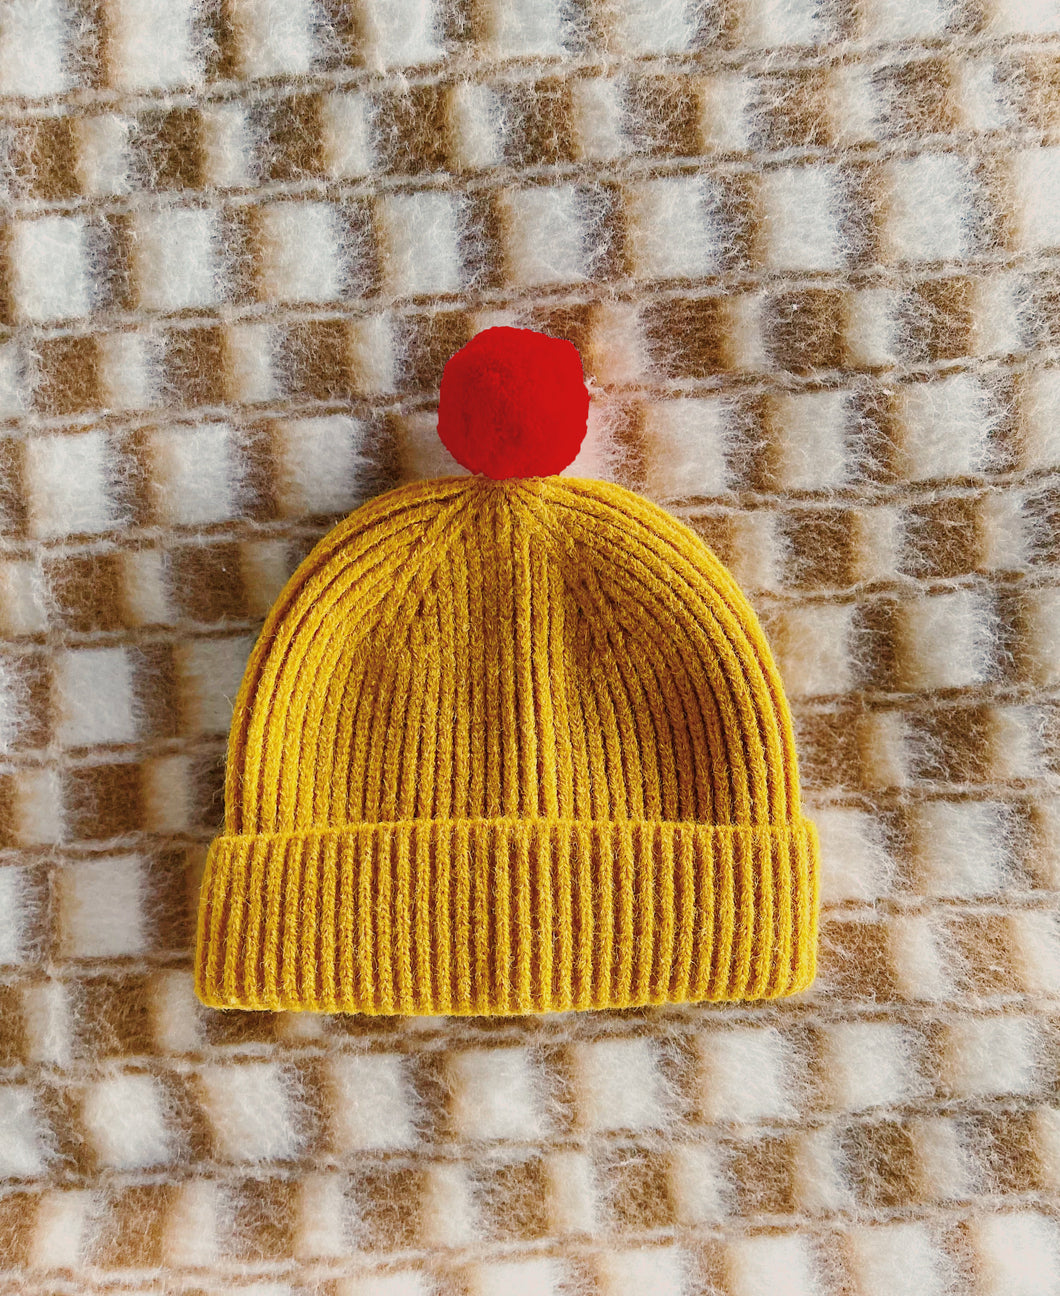 Fisherman Short Rib-Knit Beanie Cap - Mustard Yellow with Bright Red Pom Pom